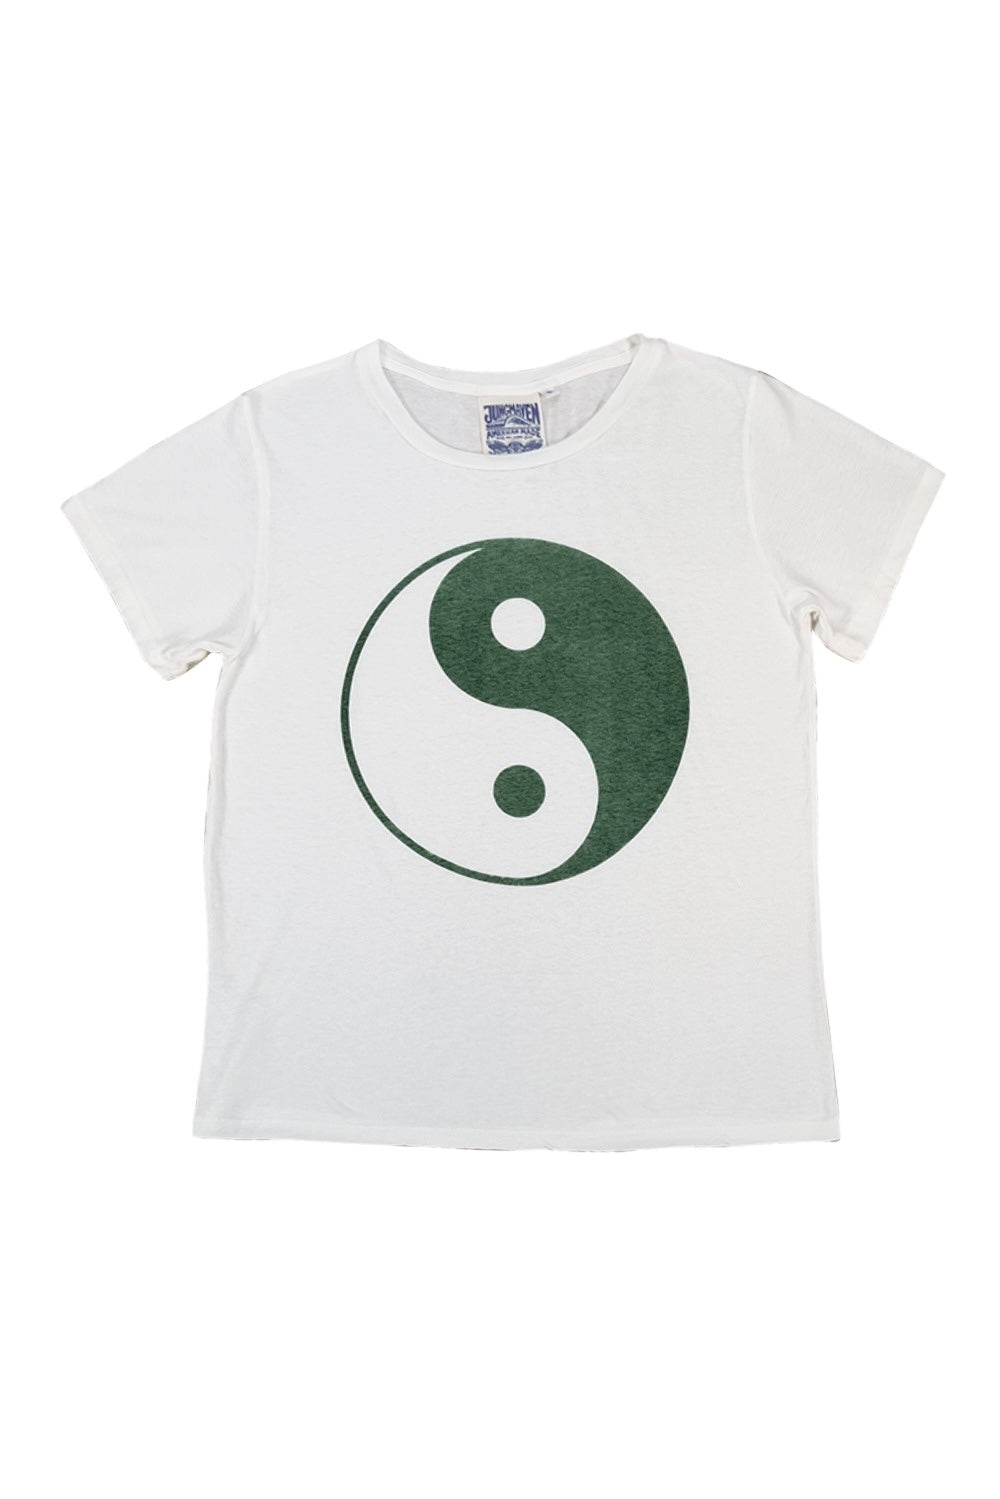 Yin Yang Ojai Tee | Jungmaven Hemp Clothing & Accessories / Color: Hunter Green